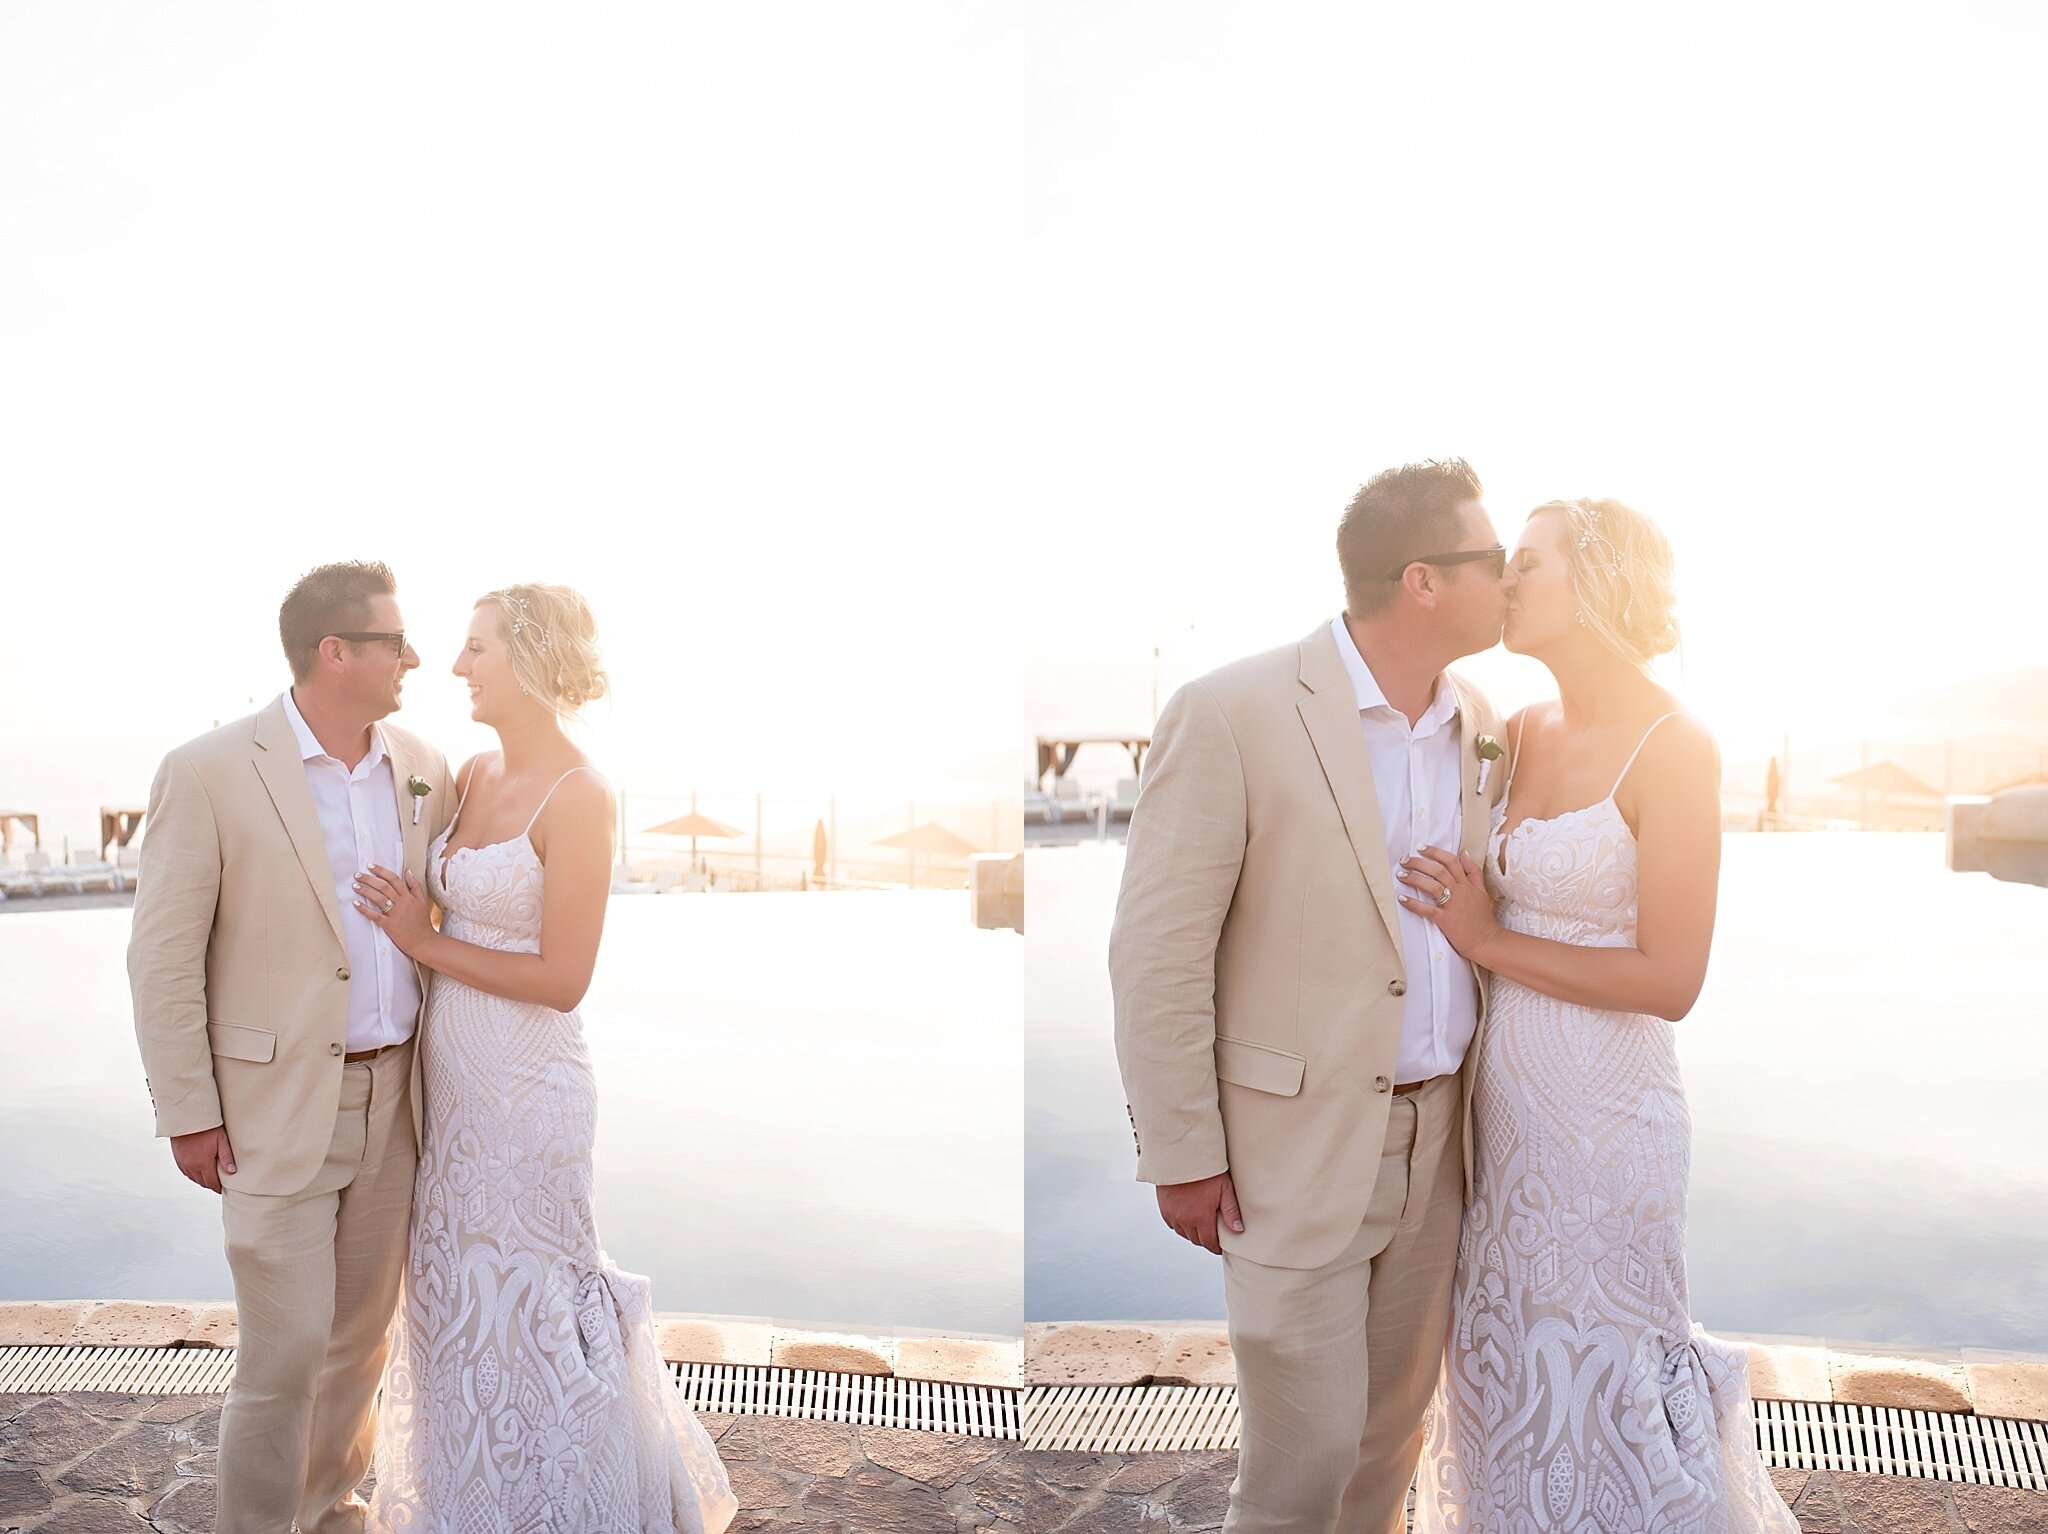 bride and groom portraits at rooftop poolside wedding reception destination pueblo bonito sunset beach mexico